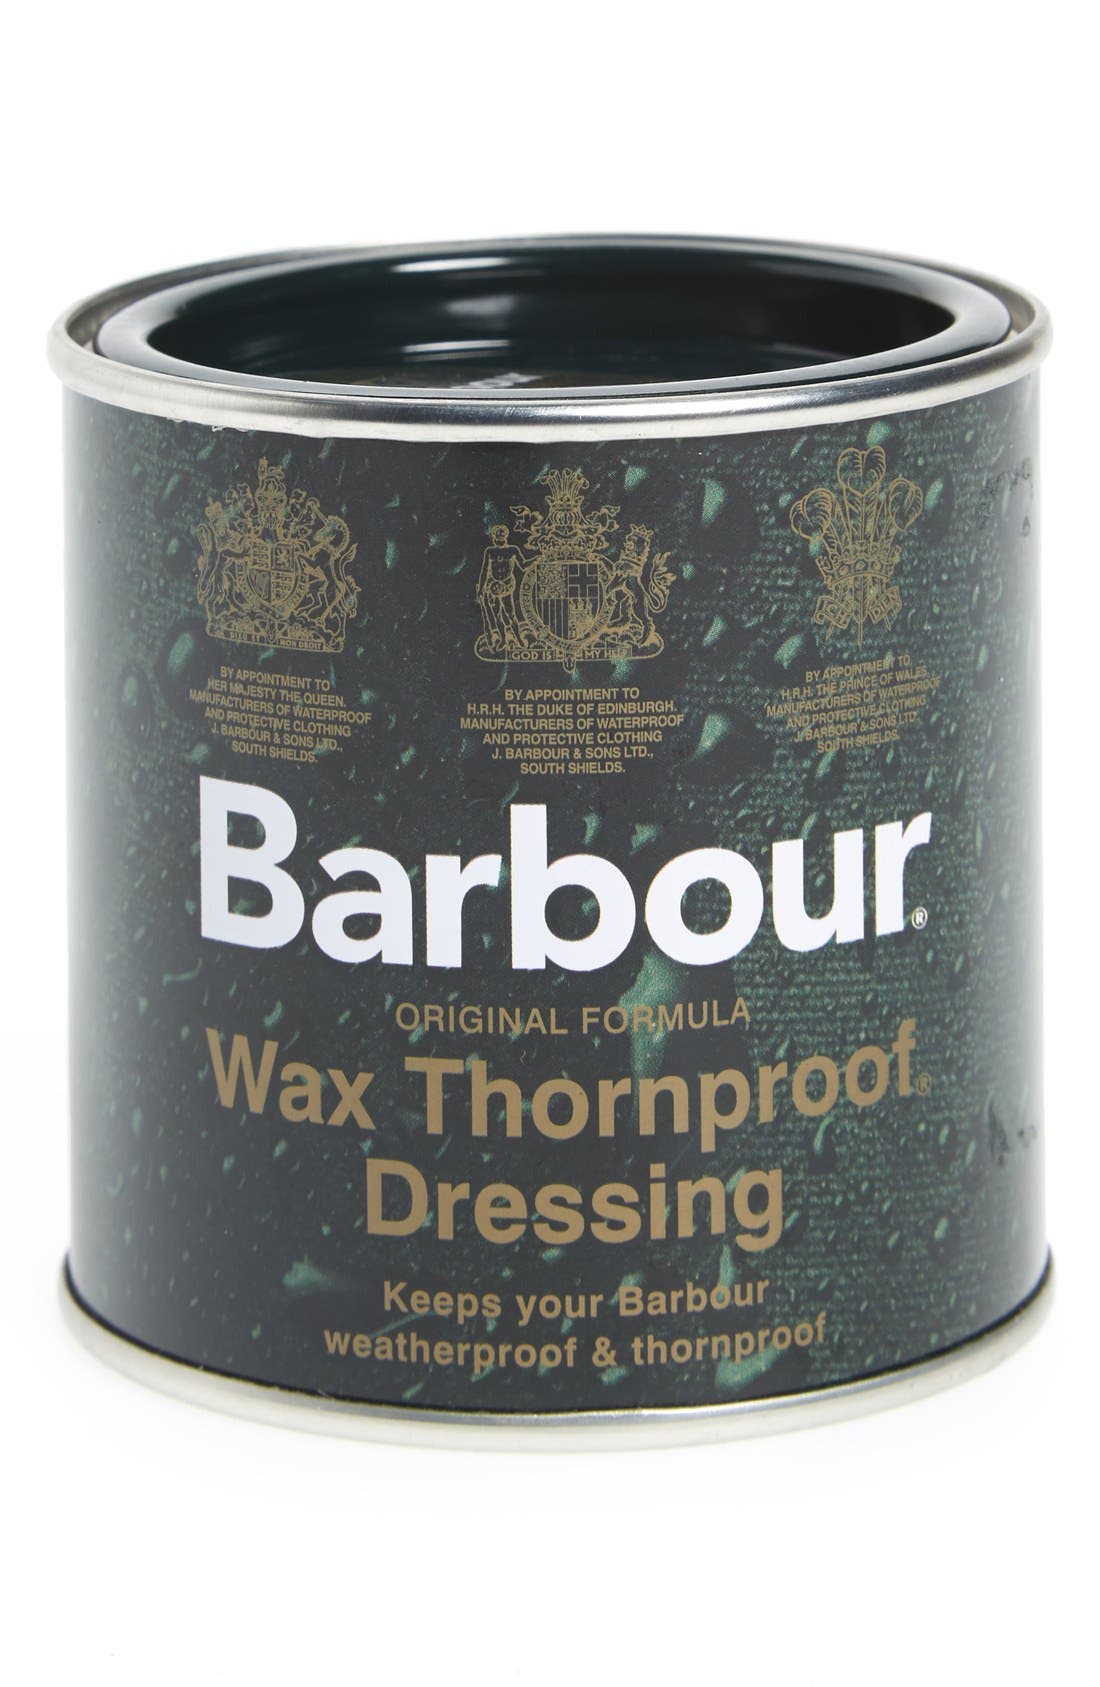 Barbour Wax Thornproof Dressing | Nordstrom